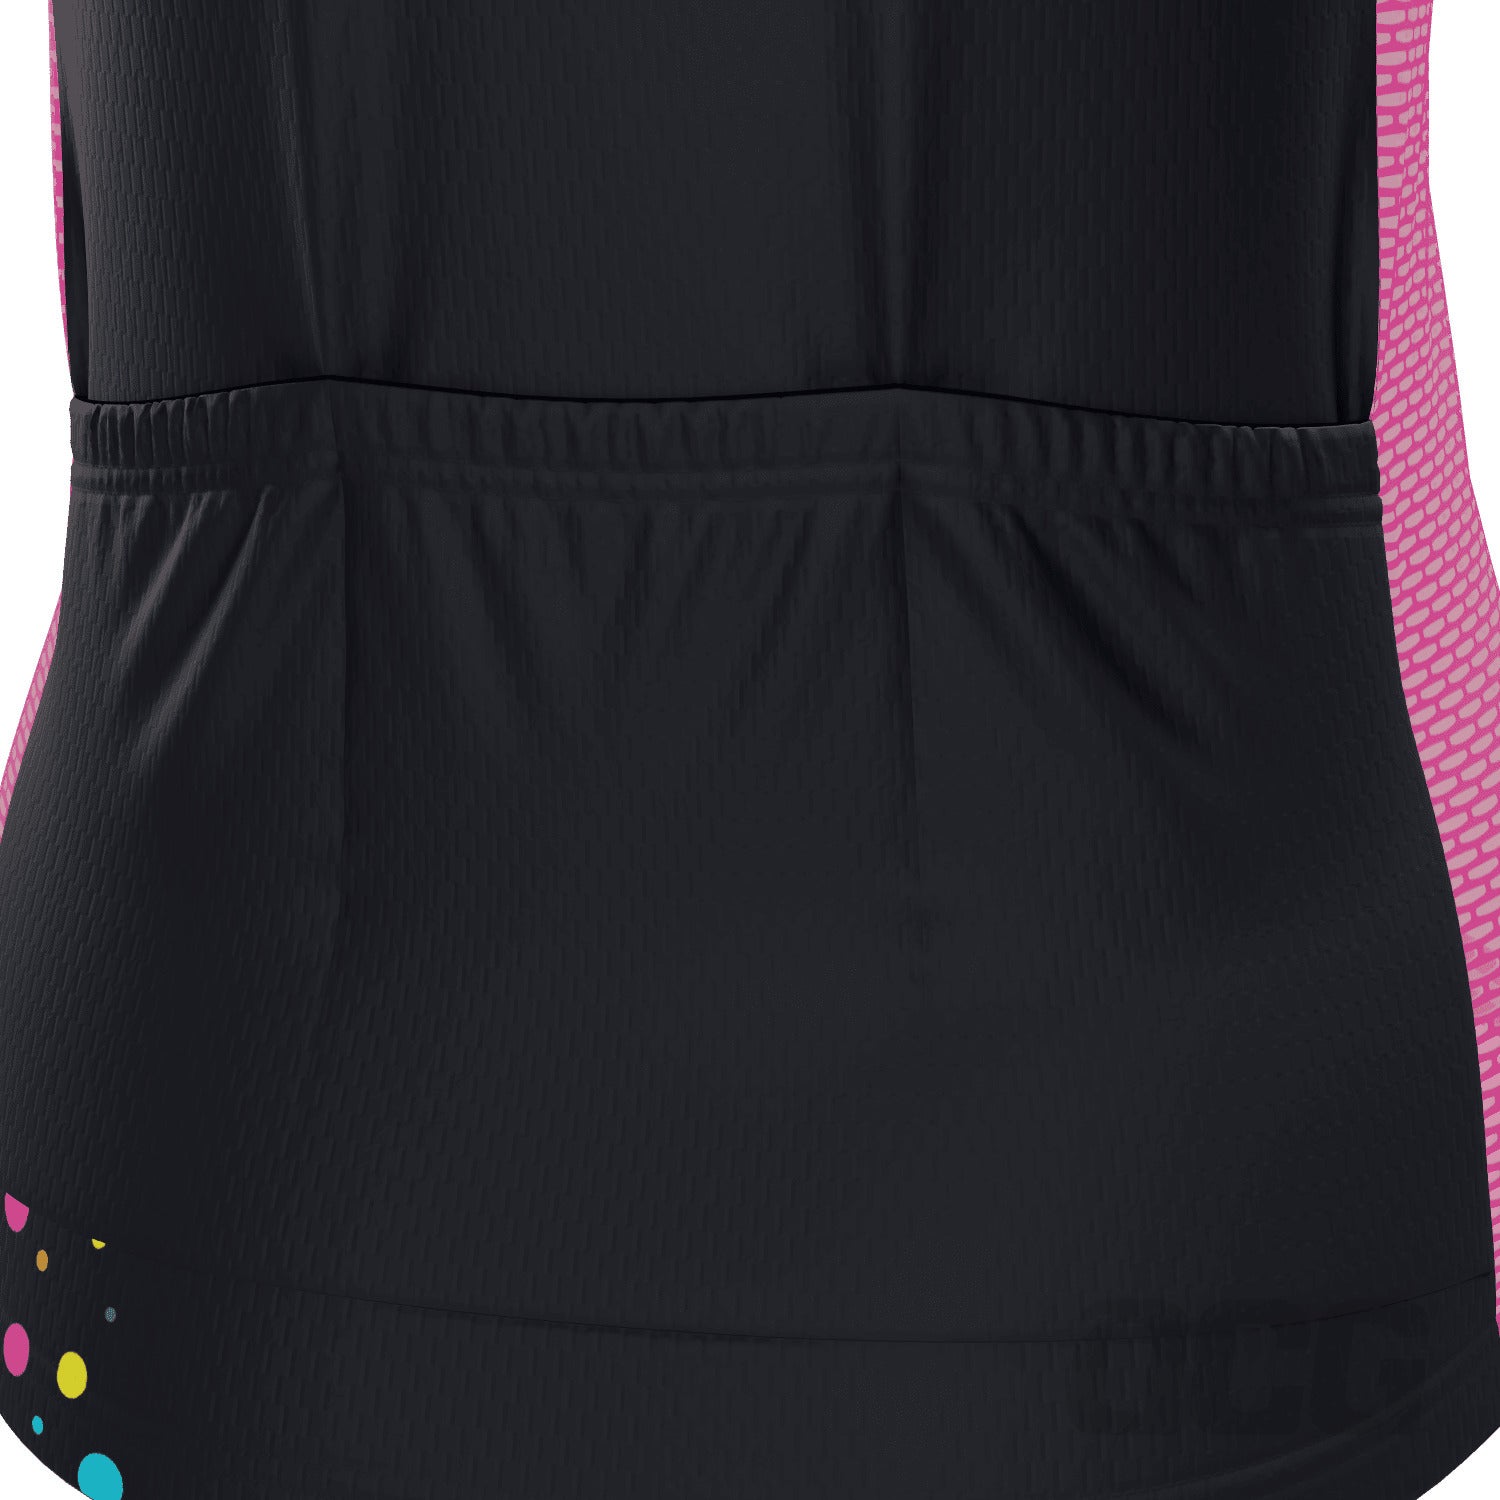 Women's Rainbow Polka Dot Short Sleeve Cycling Jersey